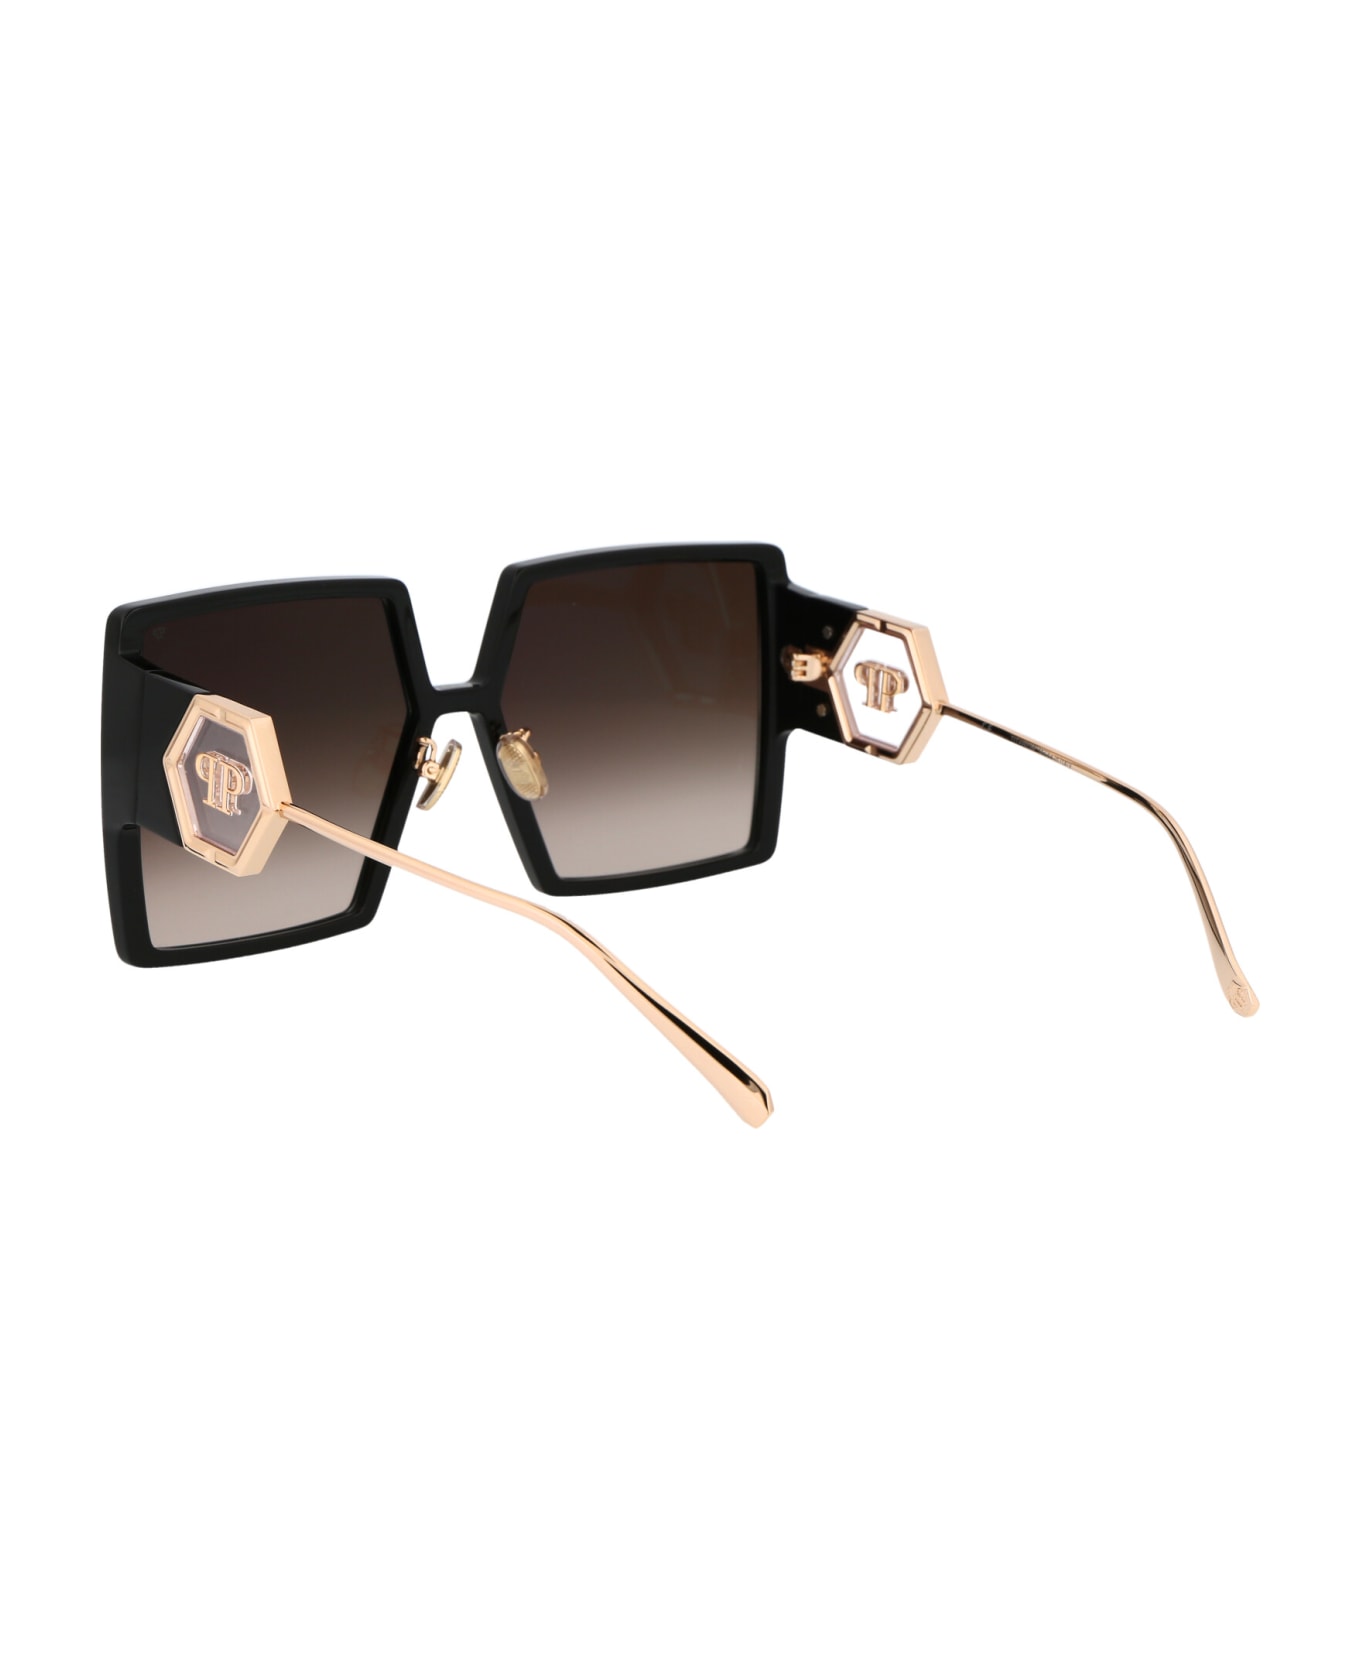 Philipp Plein Spp028m Sunglasses - 700X BLACK